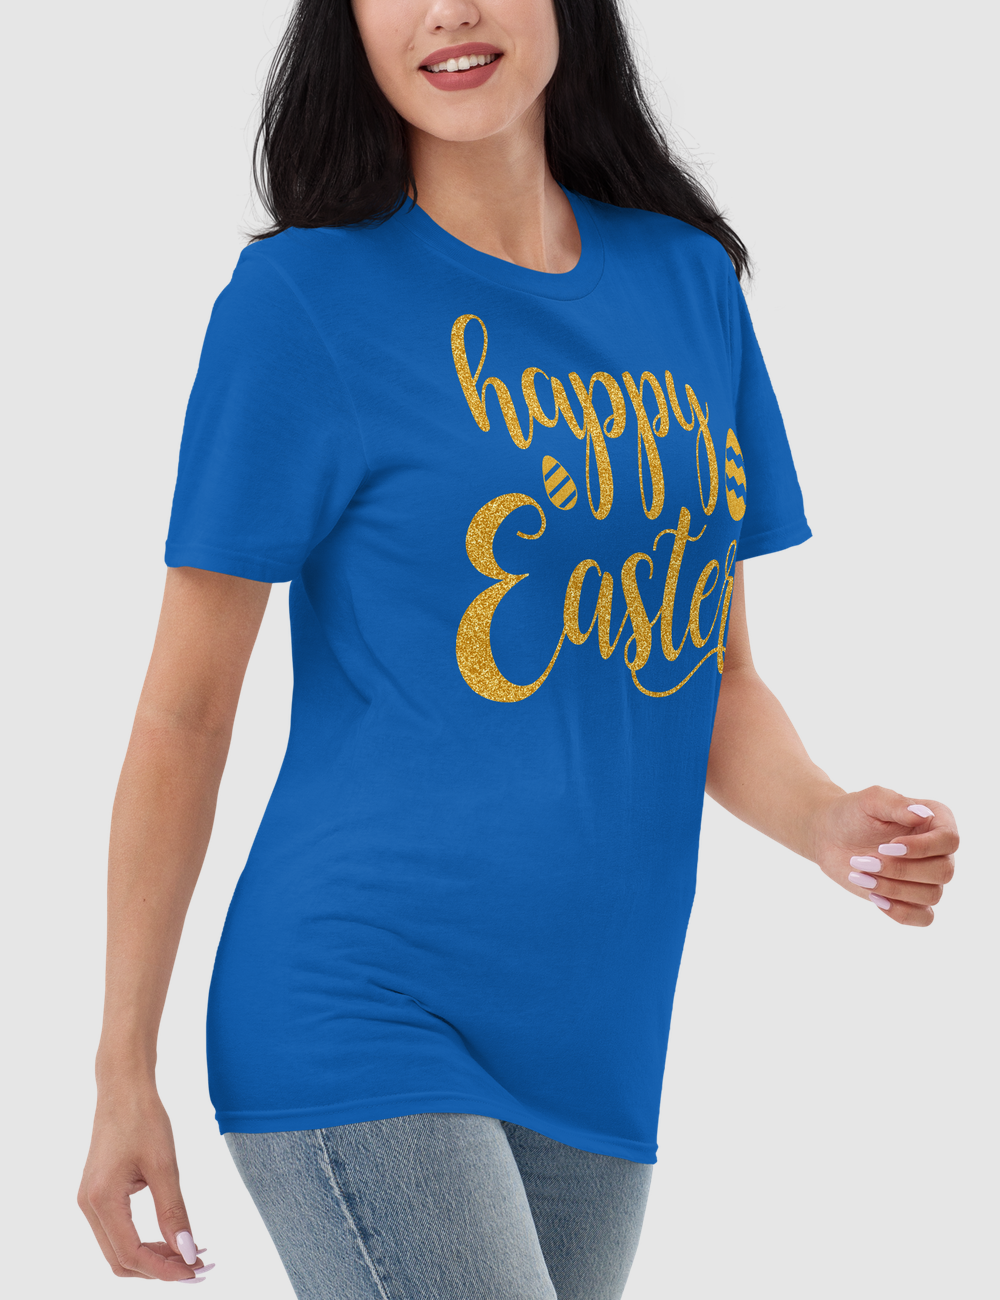 Happy Easter Women's Relaxed T-Shirt OniTakai